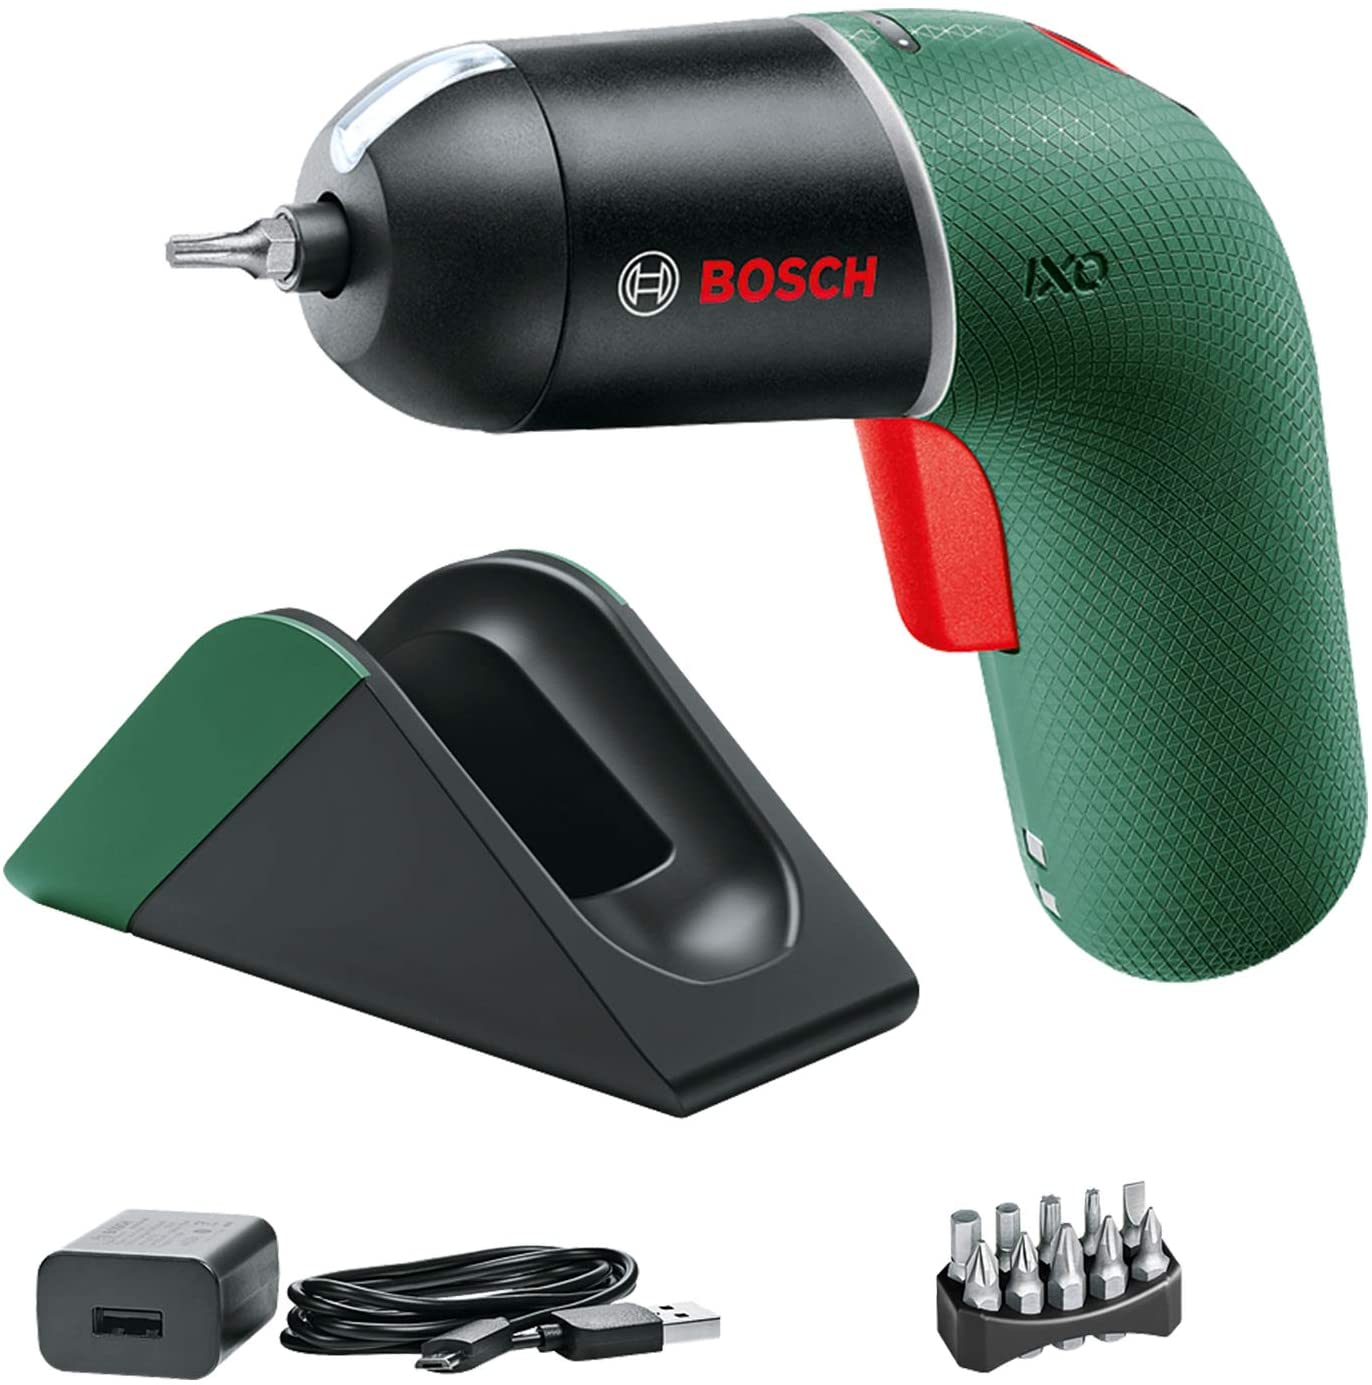 Bosch Avvitatore Elettrico IXO - Ricaricabile USB